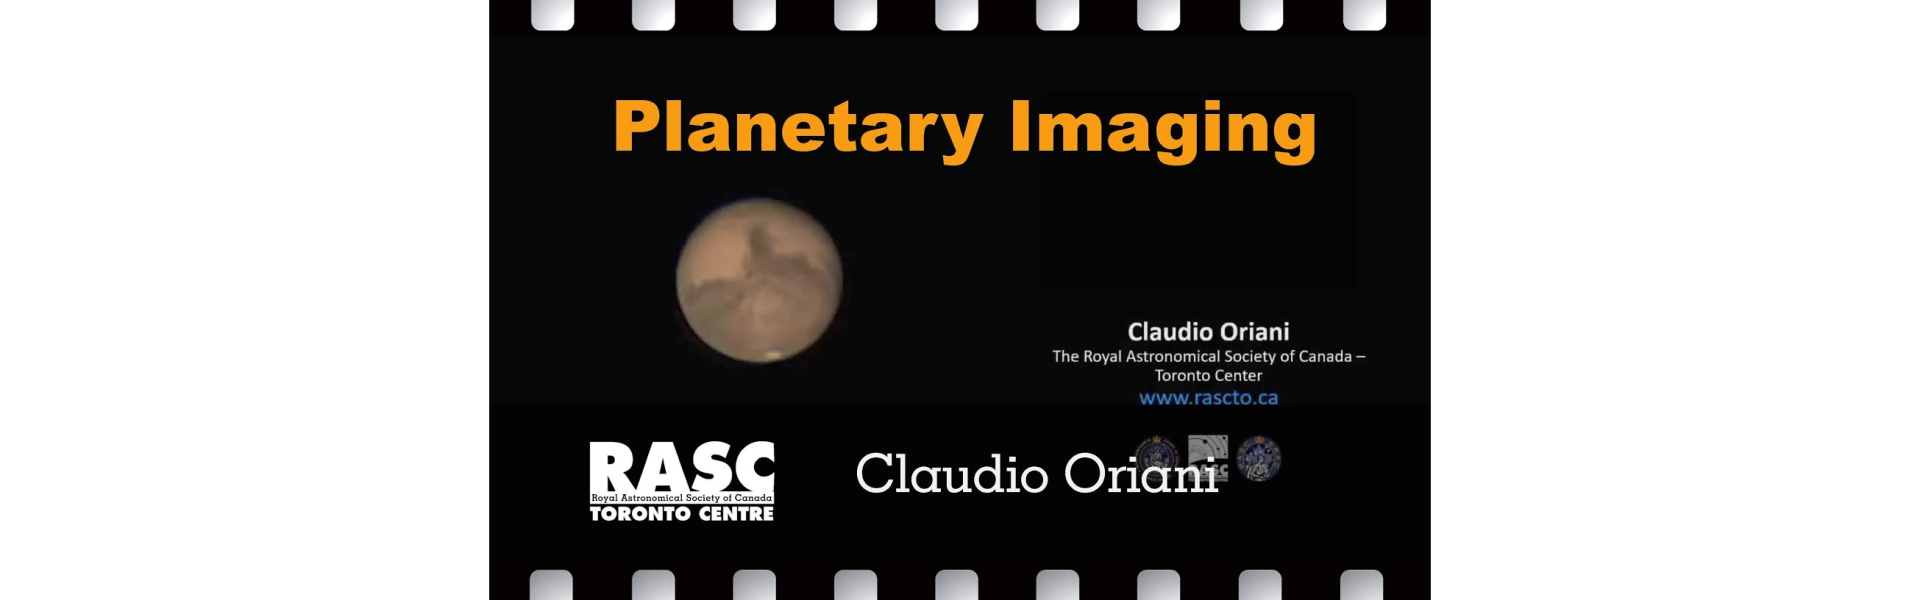 Planetary Imaging